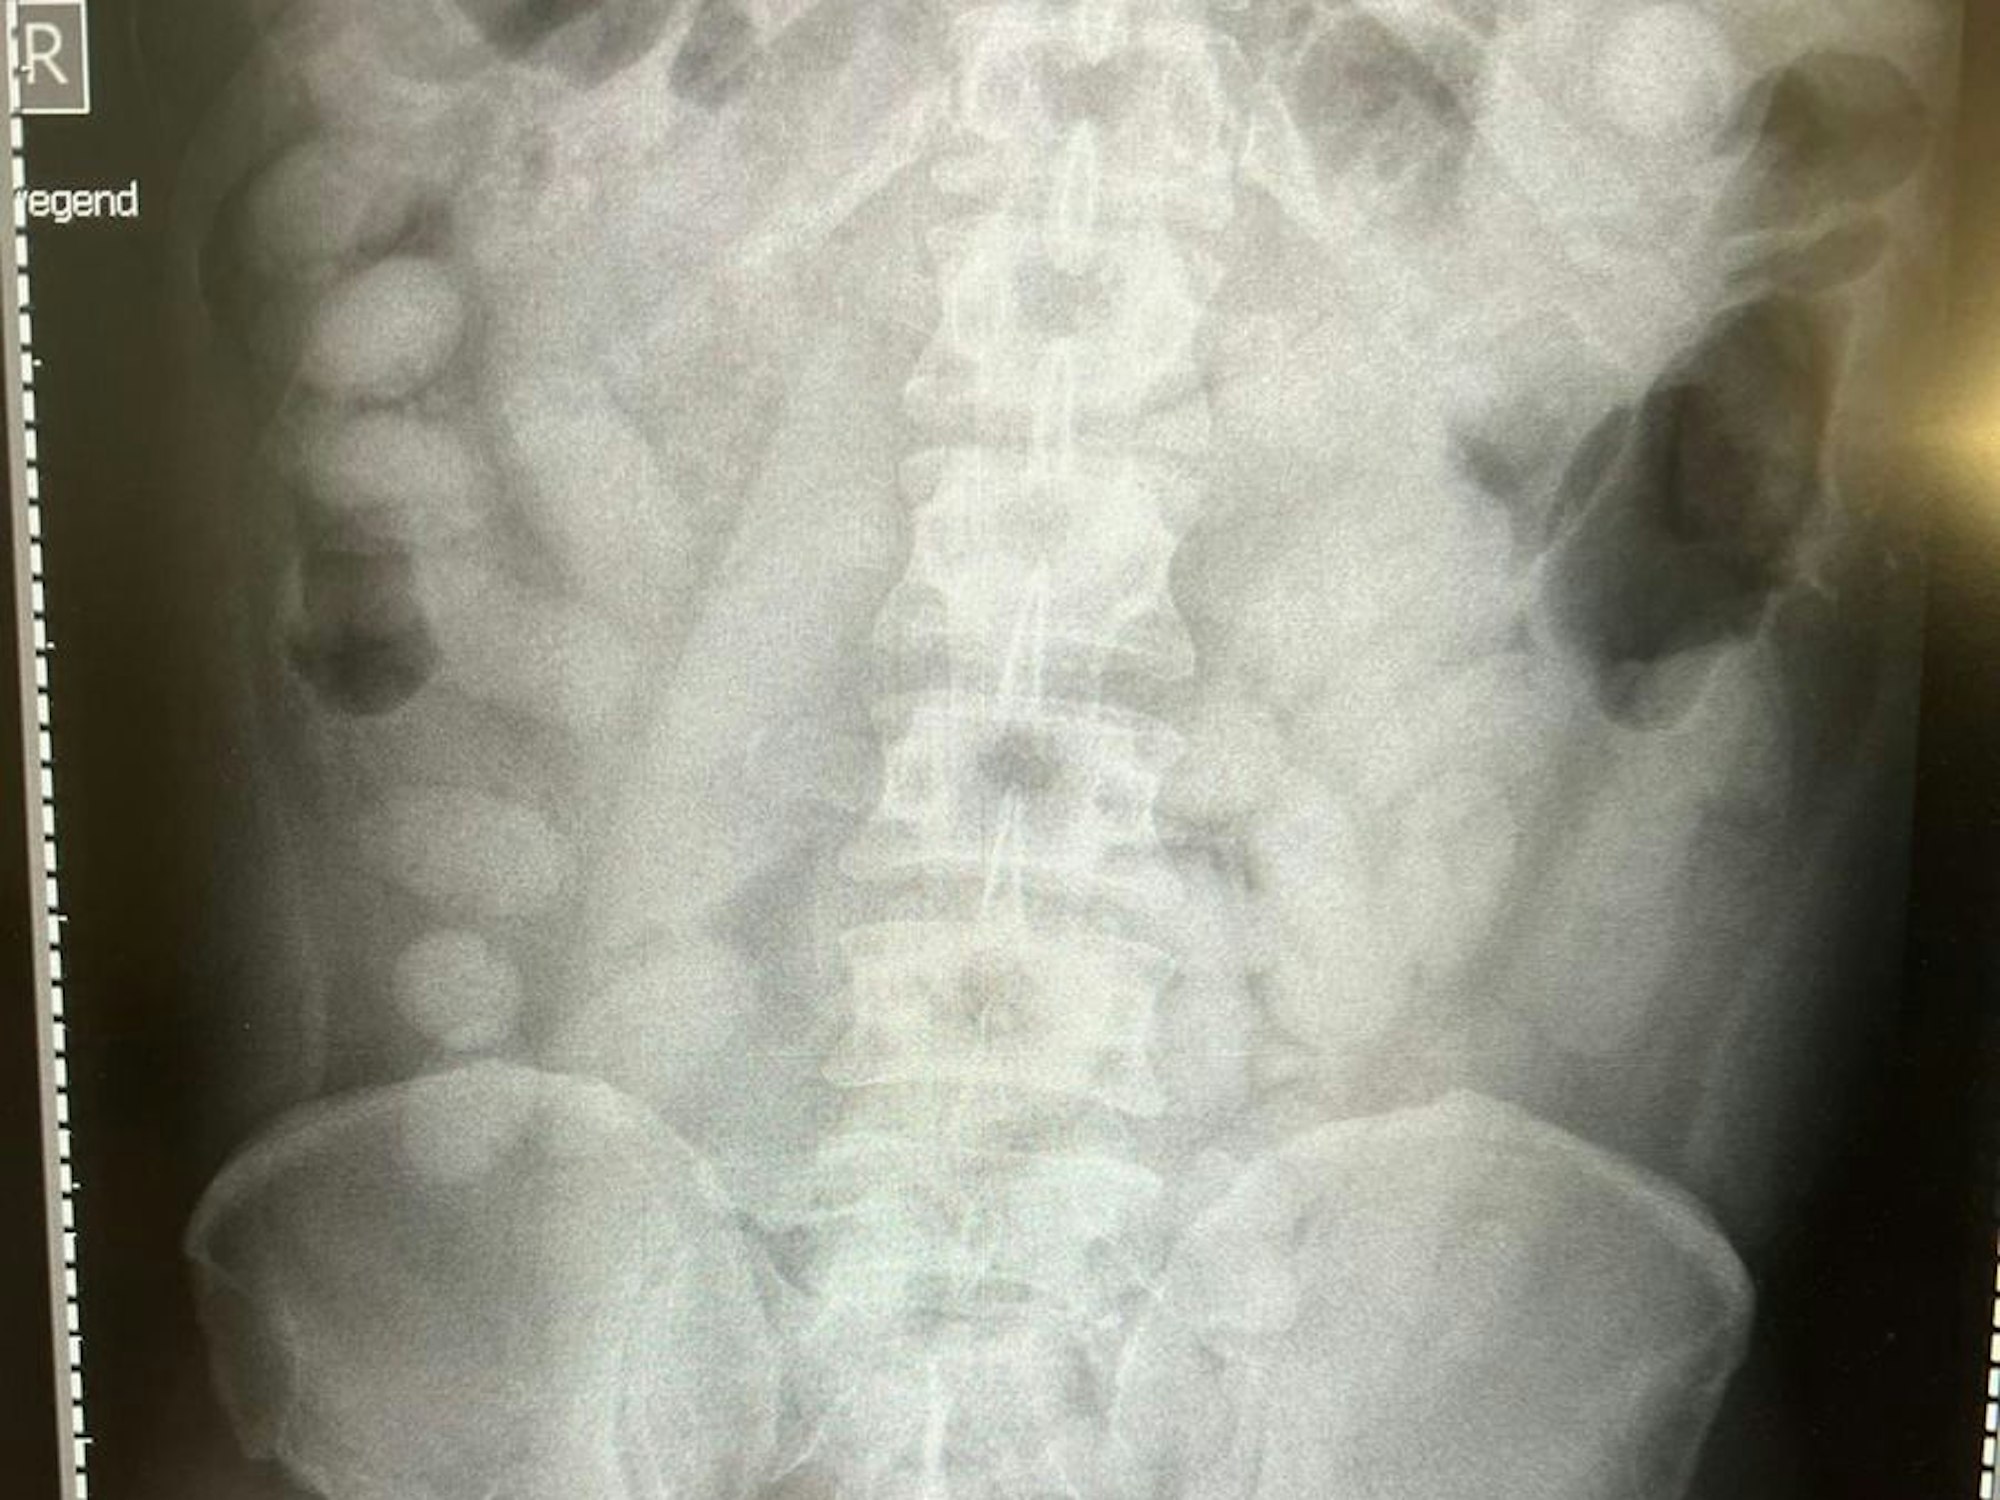 Auf dem Röntgenbild des Körperschmugglers sind ovale Päckchen zu sehen.